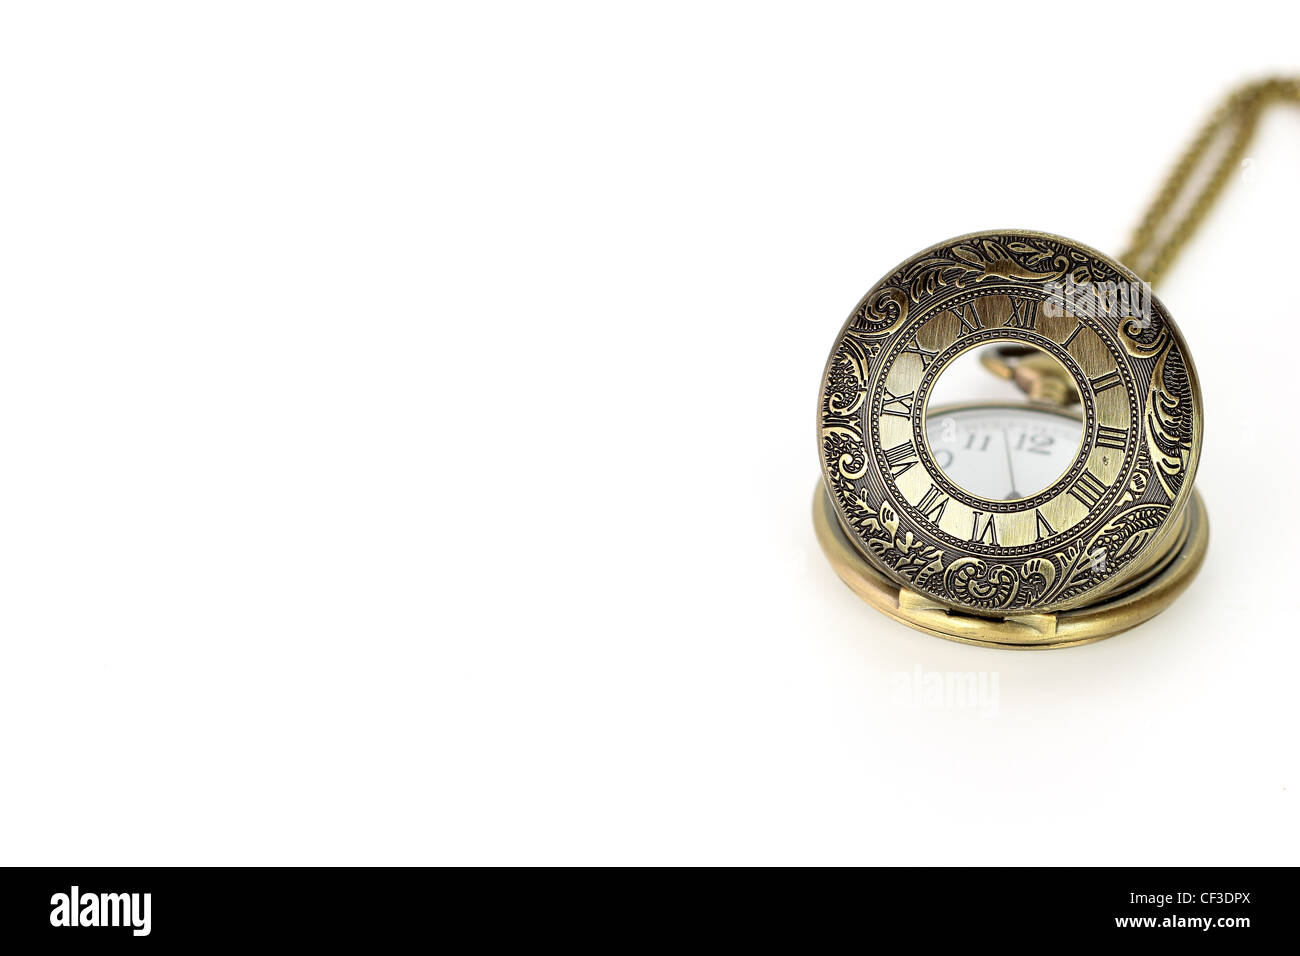 Vintage orologio da tasca su sfondo bianco Foto Stock